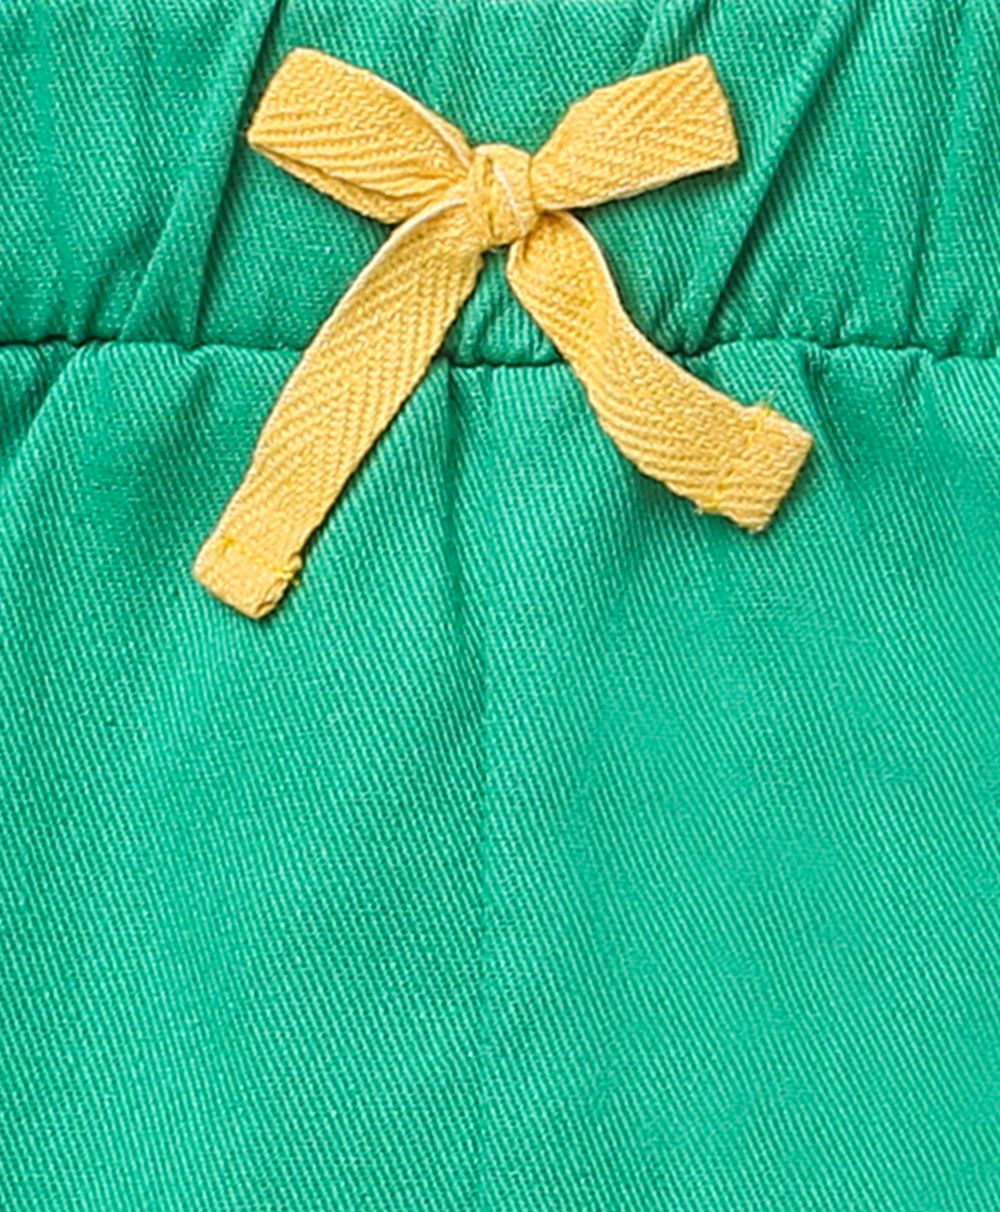 Rabbit Print Denim Top & Green Cotton Twill Shorts